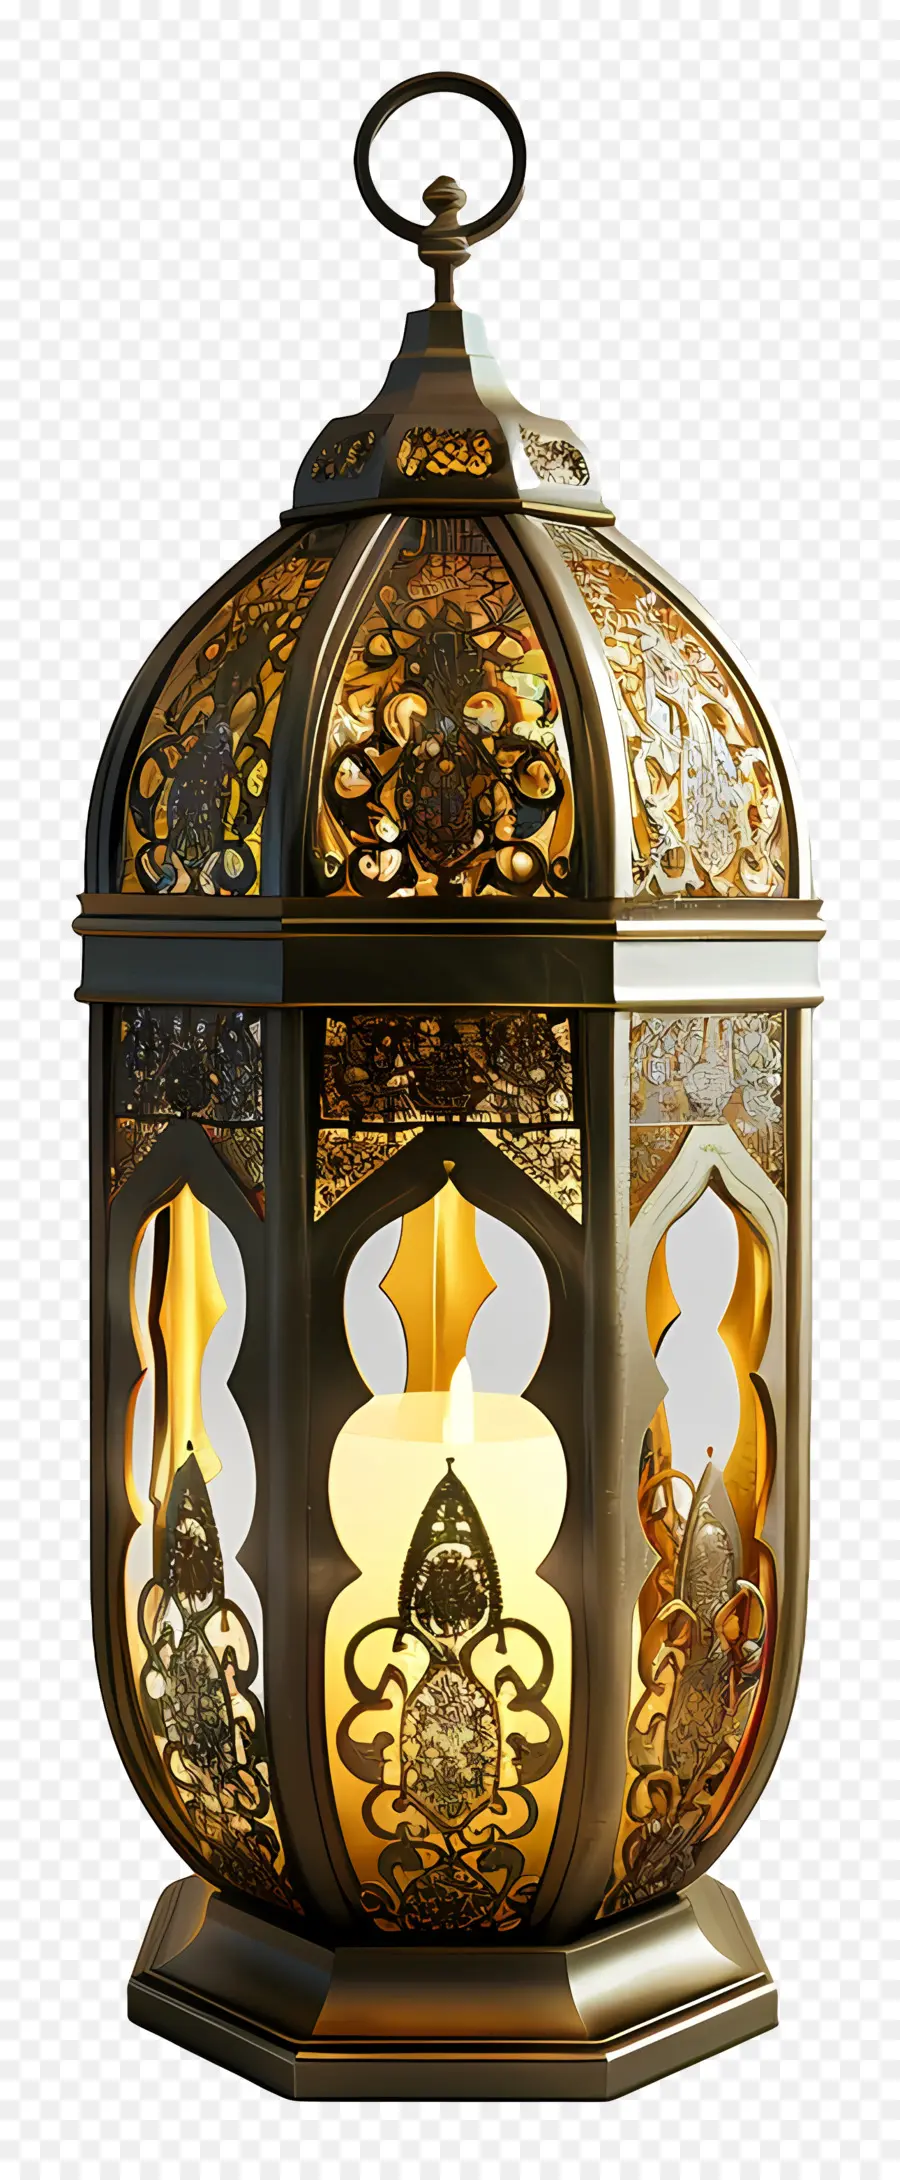 O Ramadã Lanterna，Lâmpada Ornamentada PNG